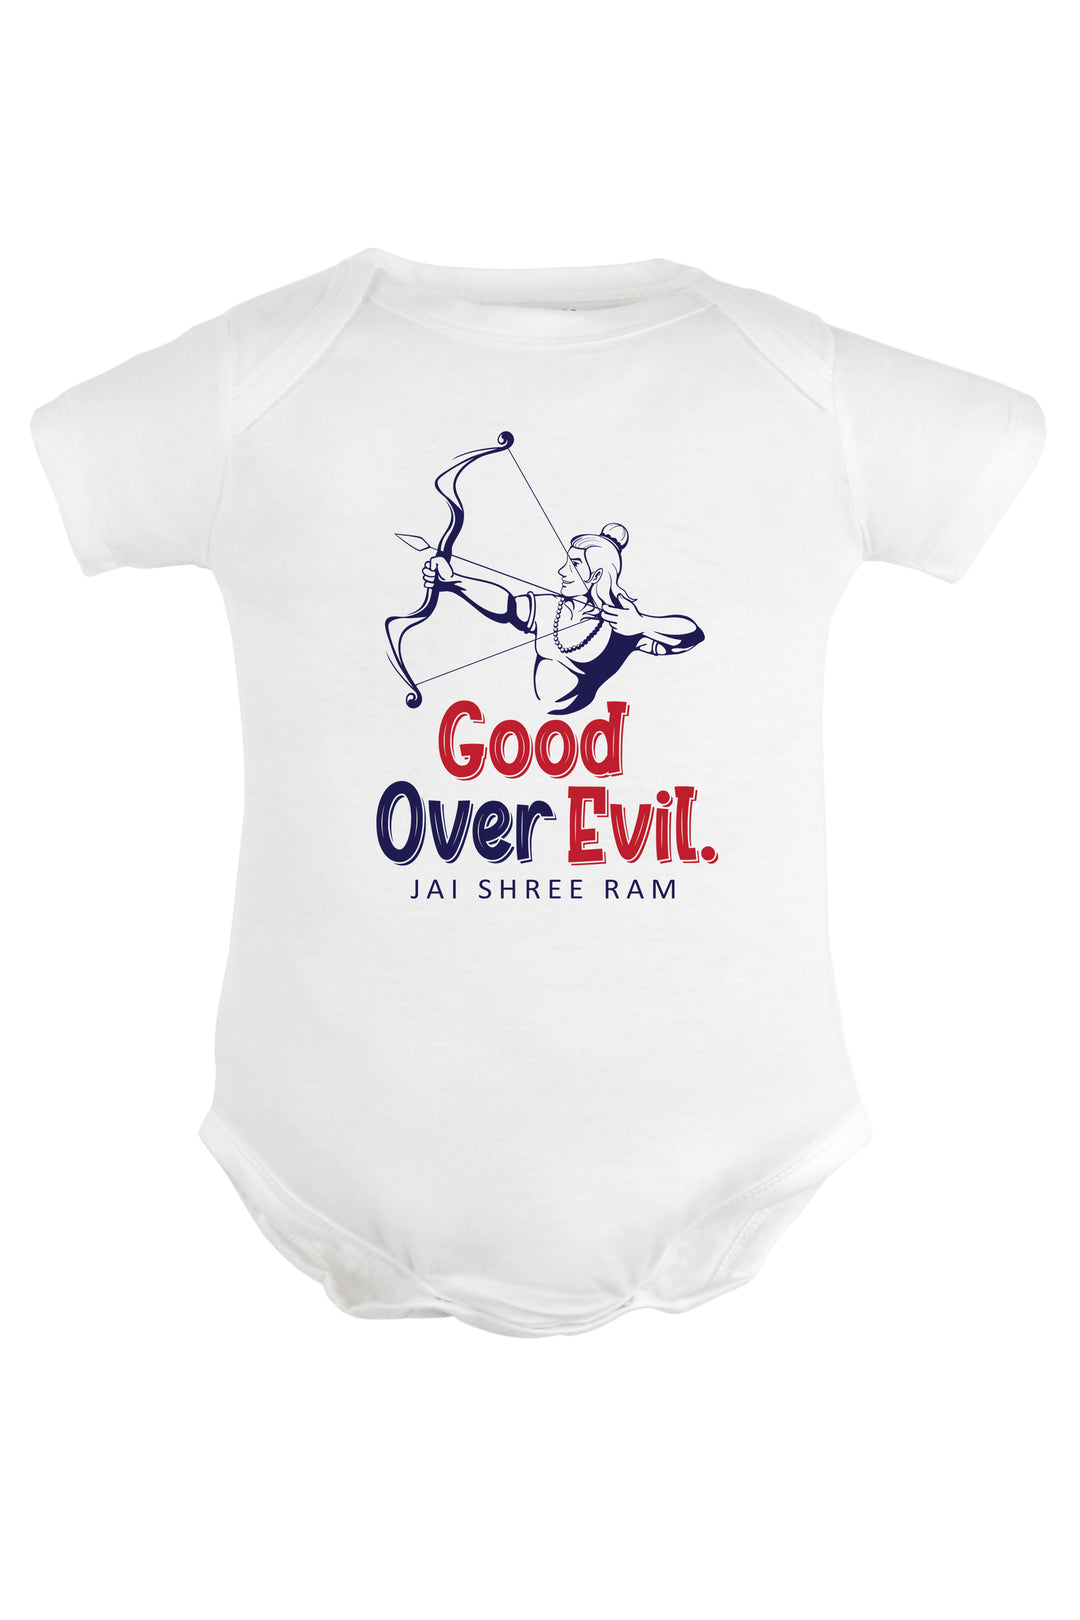 Good Over Evil Jai Shree Ram Baby Romper | Onesies